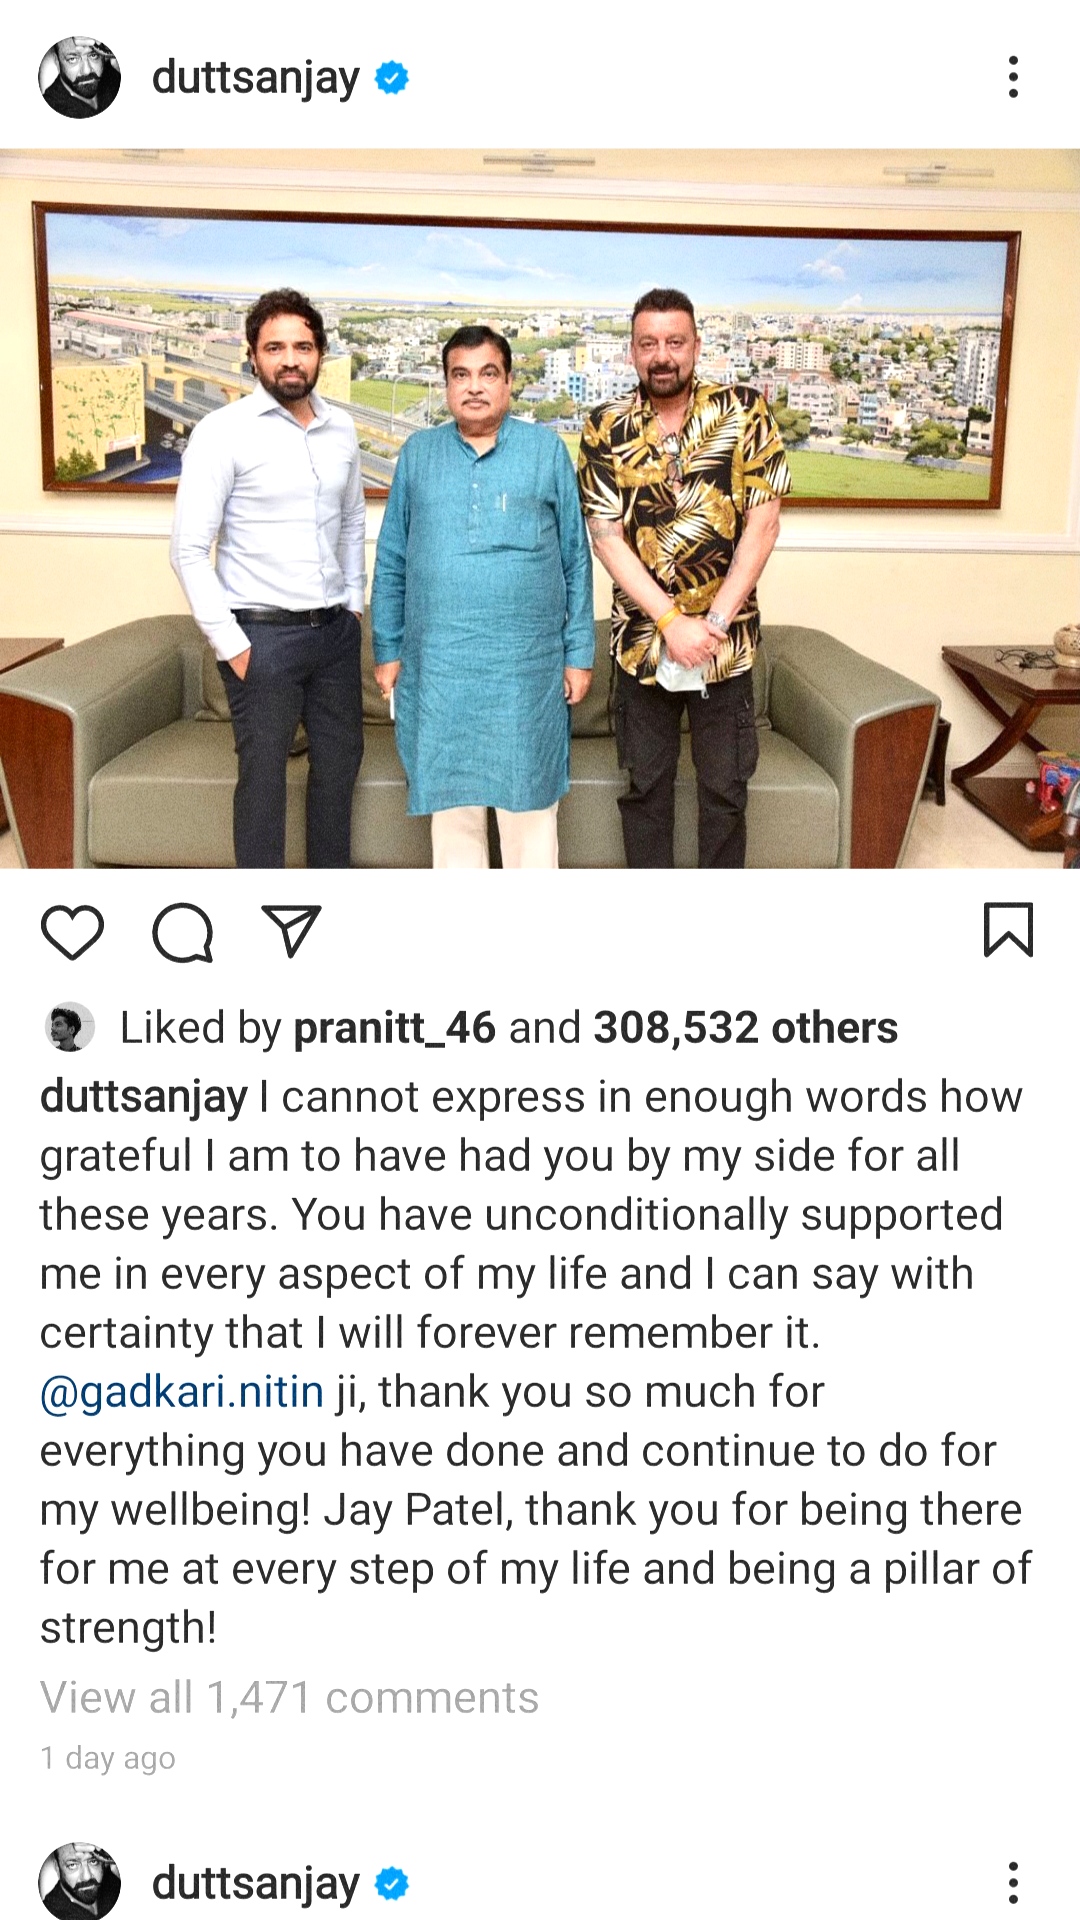 Actor Sanjay Dutt shared photos with Nitin Gadkari